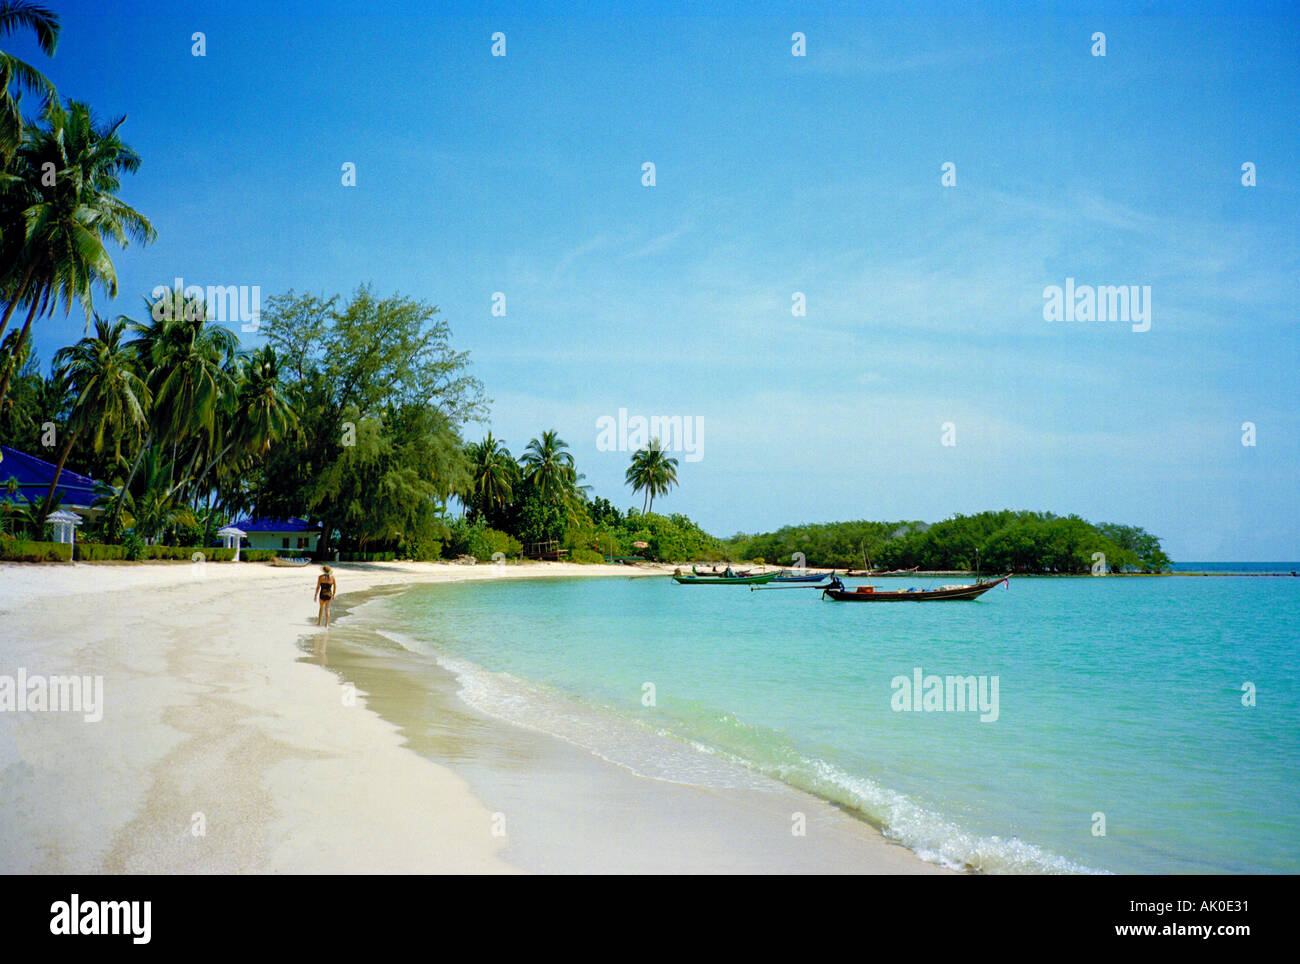 A classic Thai beach view - palm trees, silver sand, and blue green sea Stock Photo